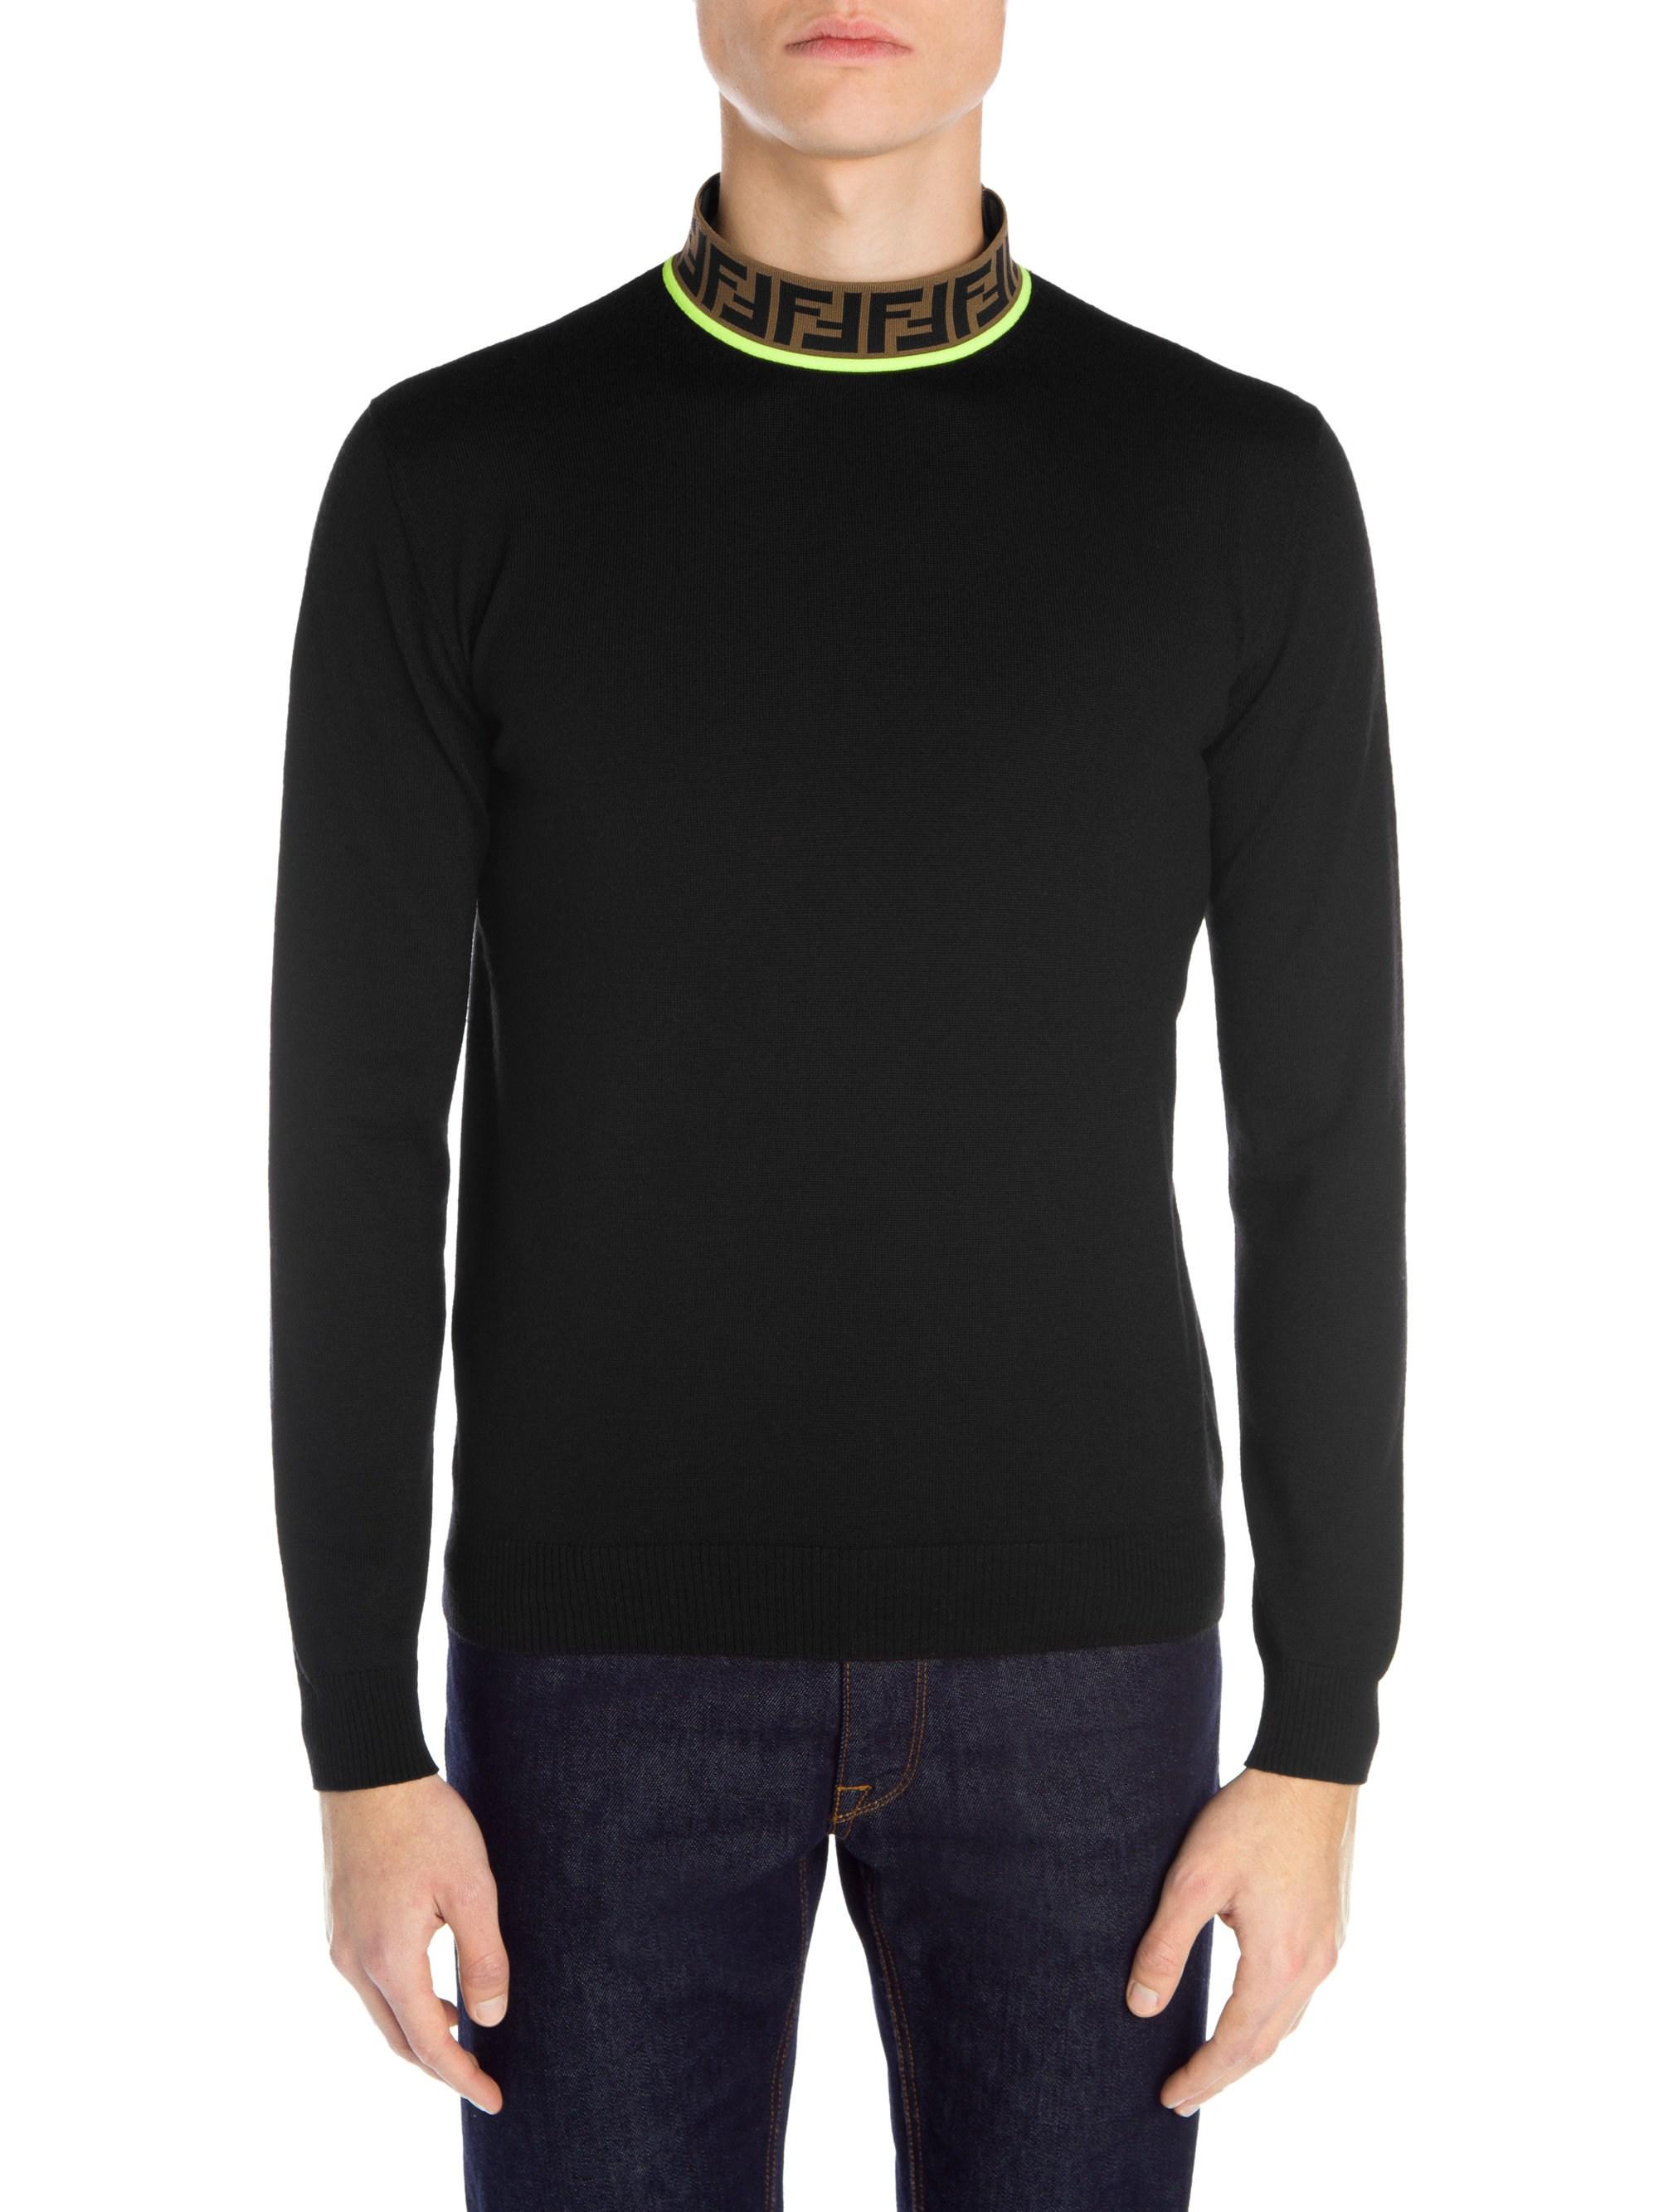 Fendi Ff Mockneck Wool-blend Sweater in Black for Men - Lyst